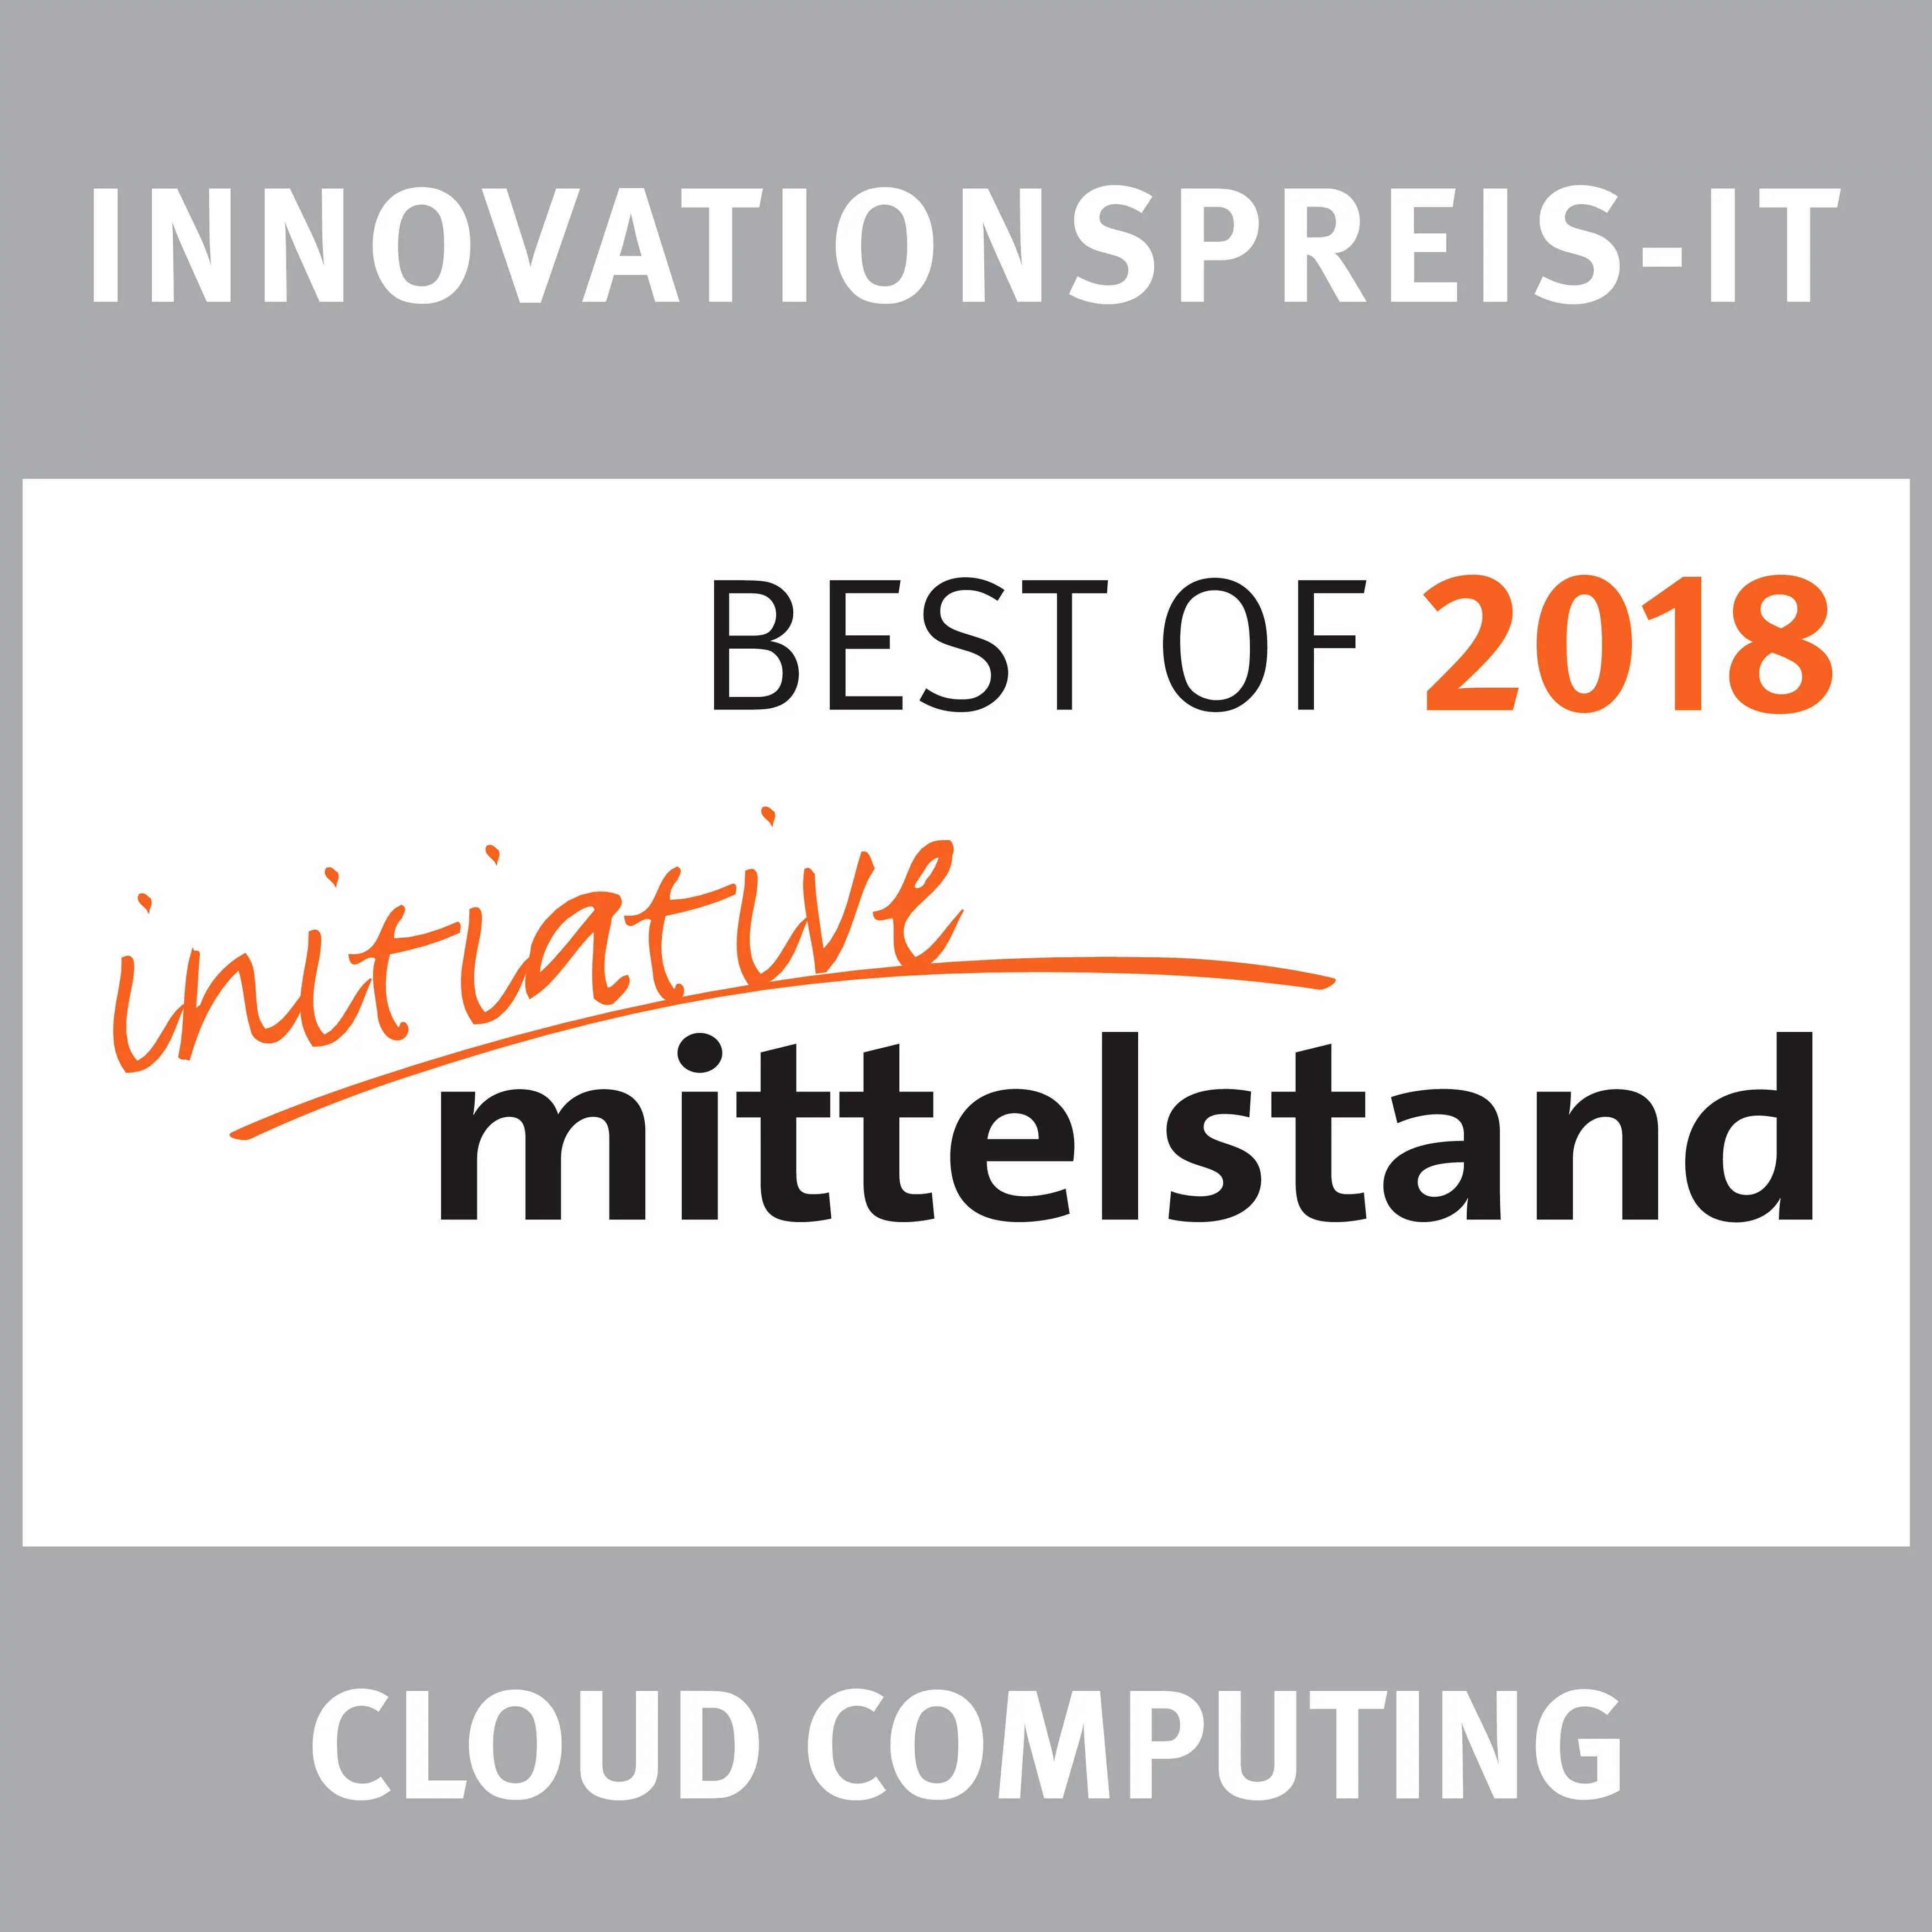 Best of 2018 - Cloud Computing (Initiative Mittelstand)